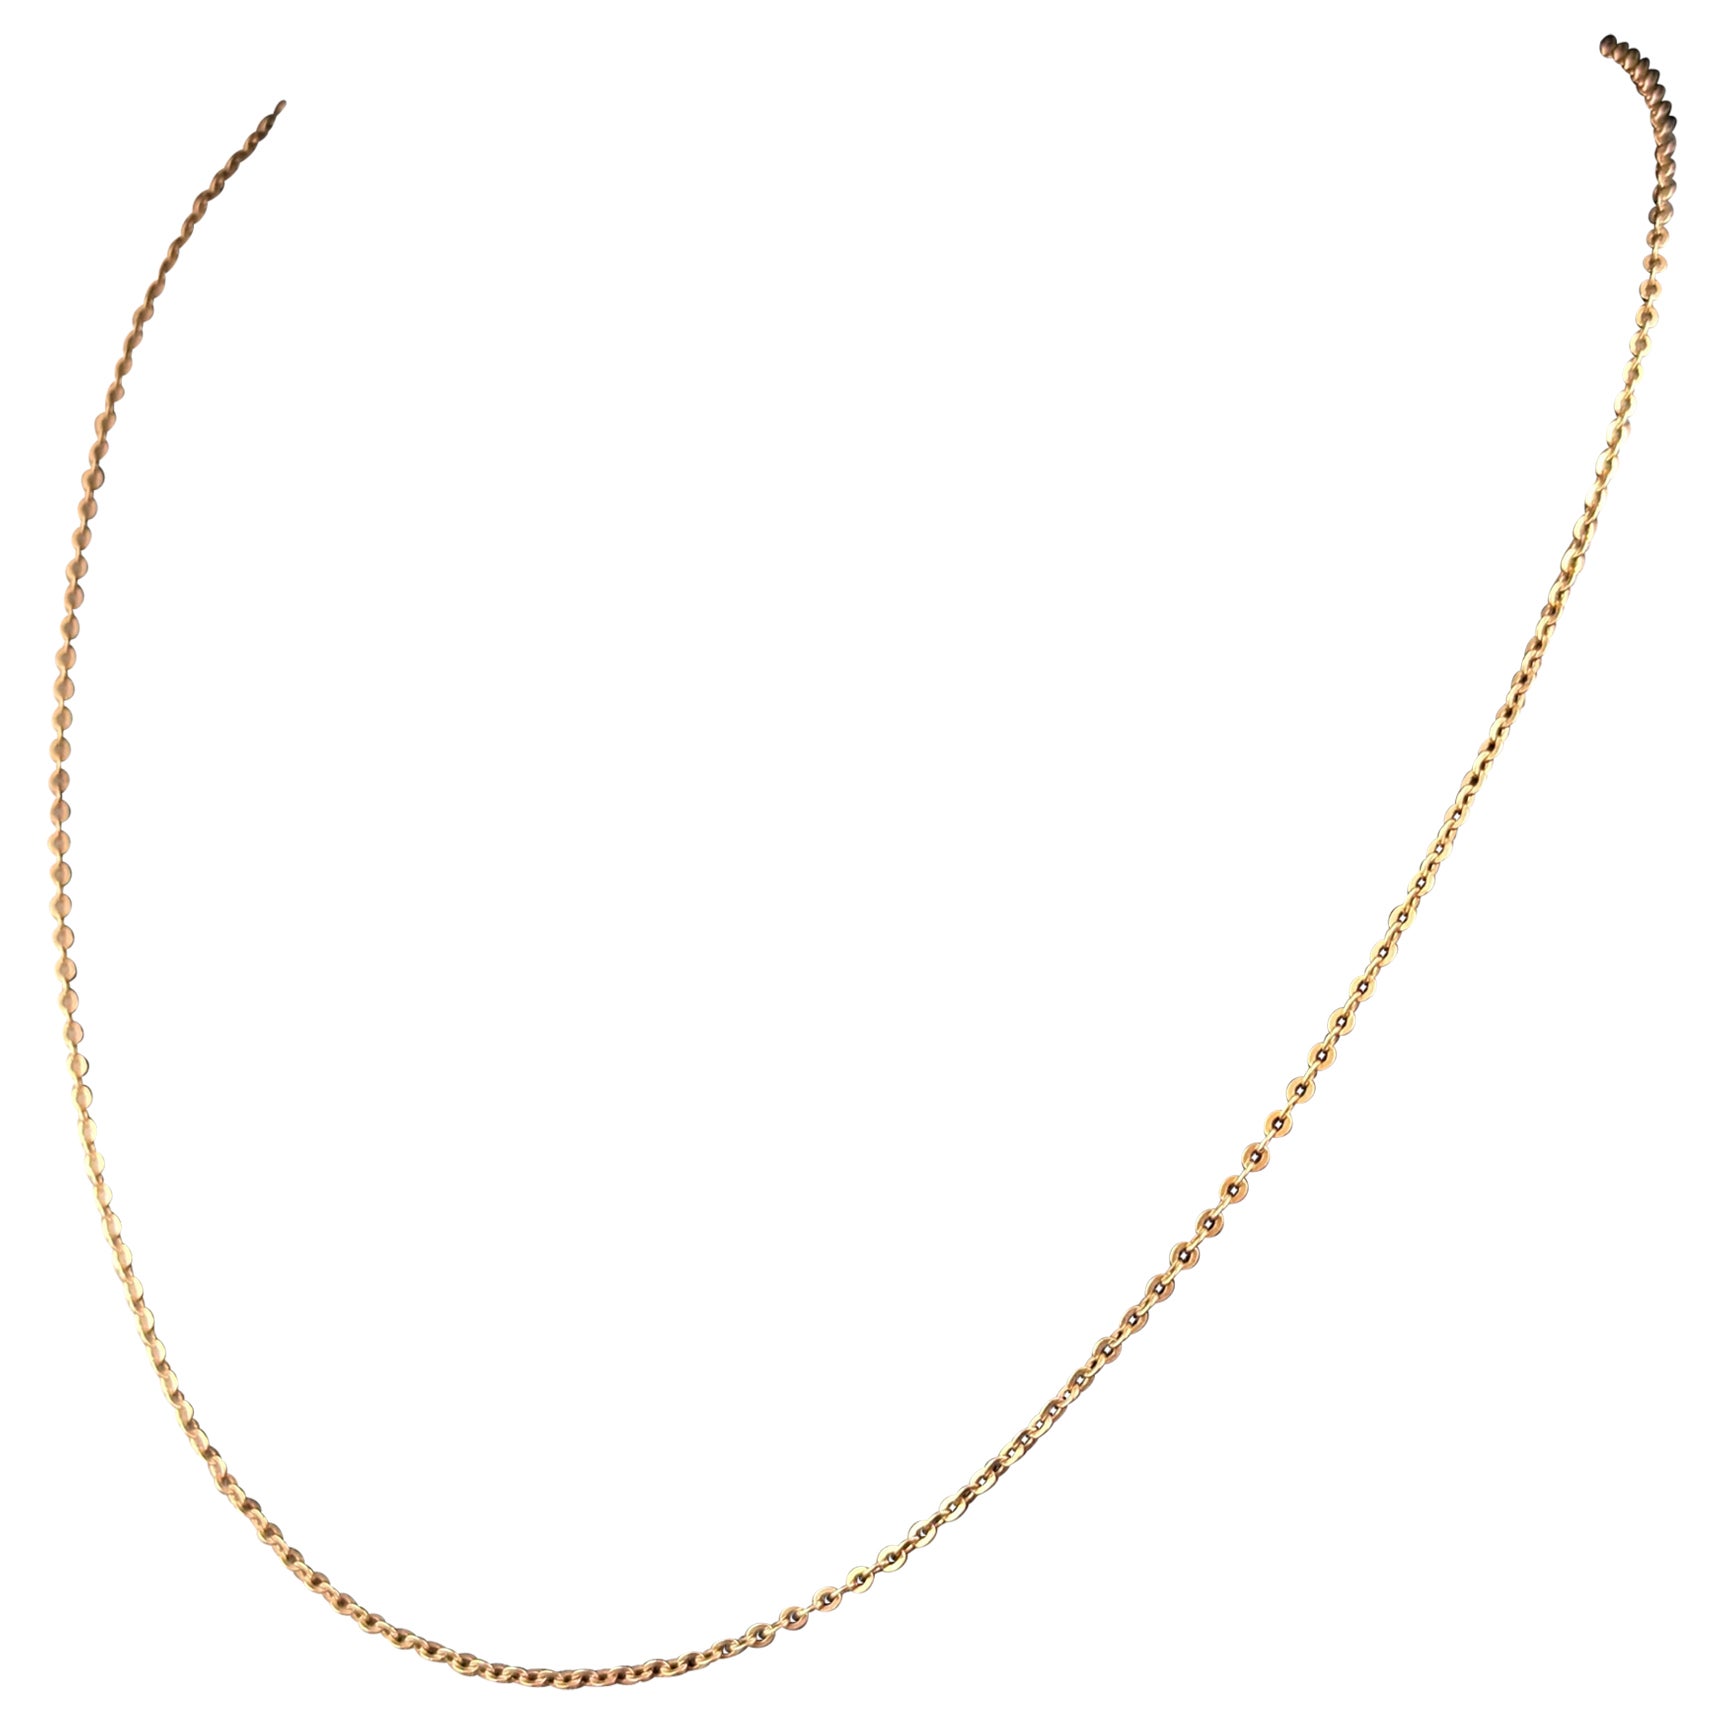 Antique 9k gold trace link chain necklace, Edwardian 